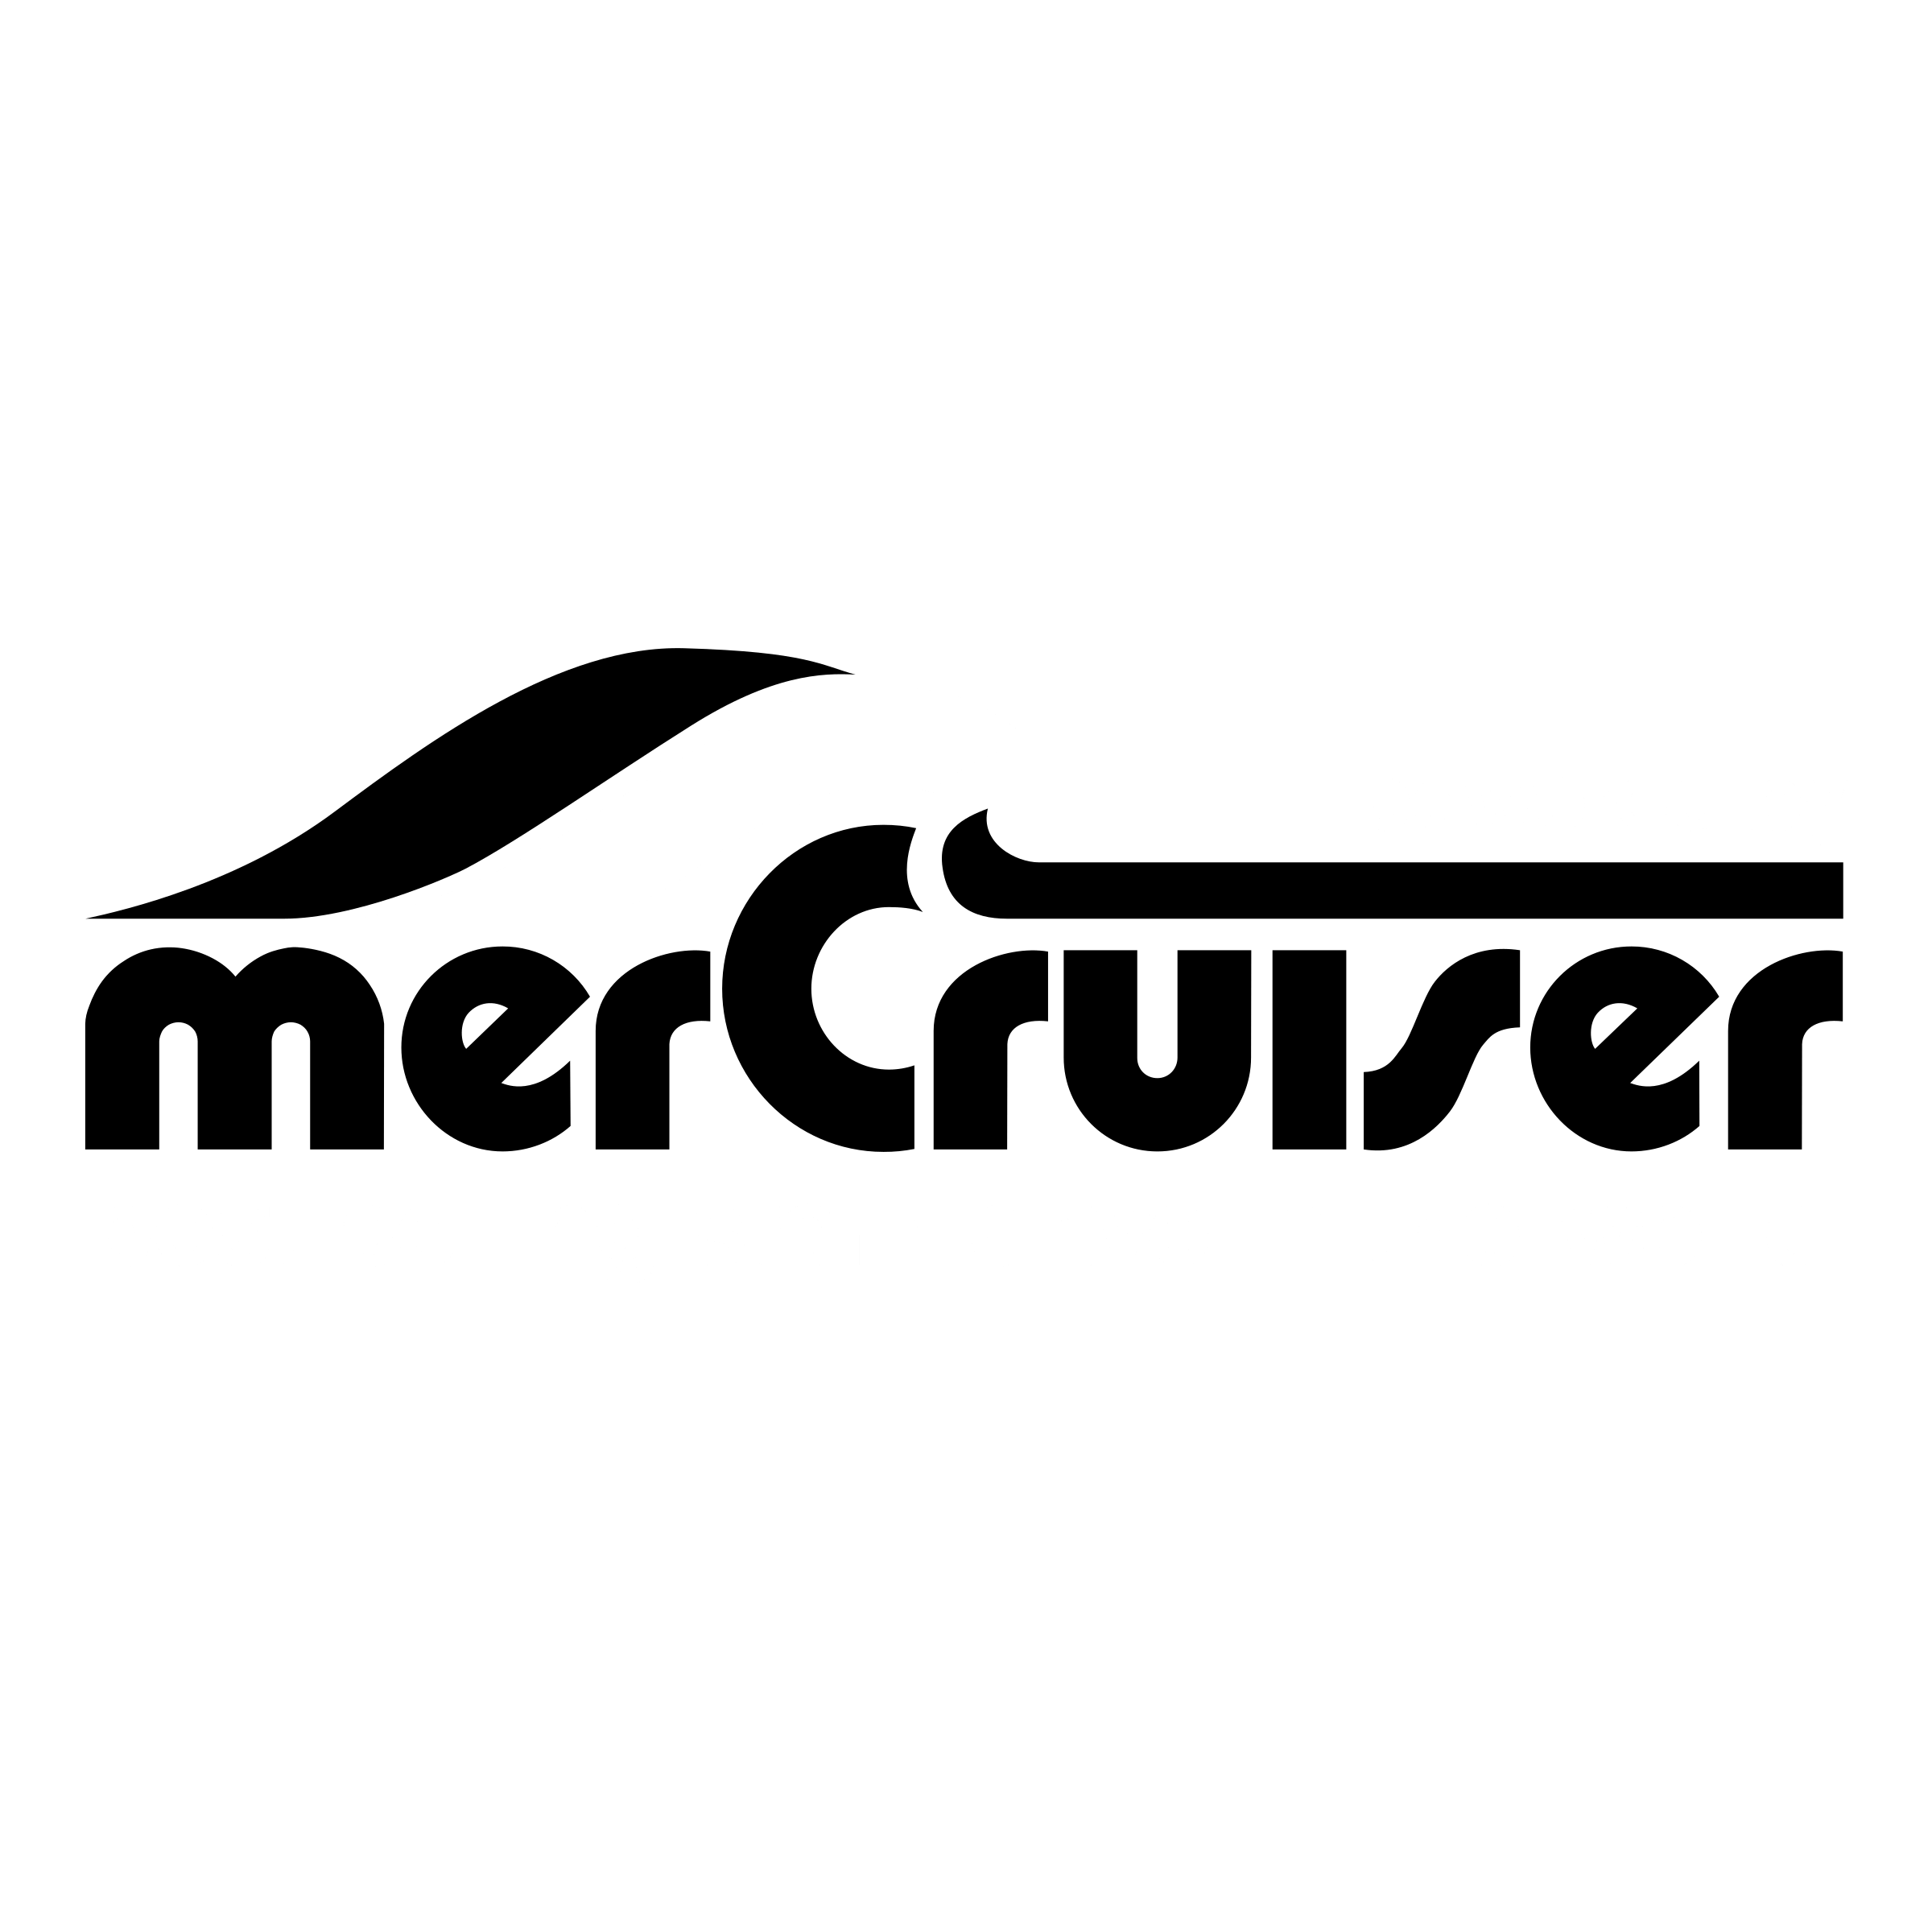 Mercruiser Logo - Mercruiser Logo PNG Transparent & SVG Vector - Freebie Supply